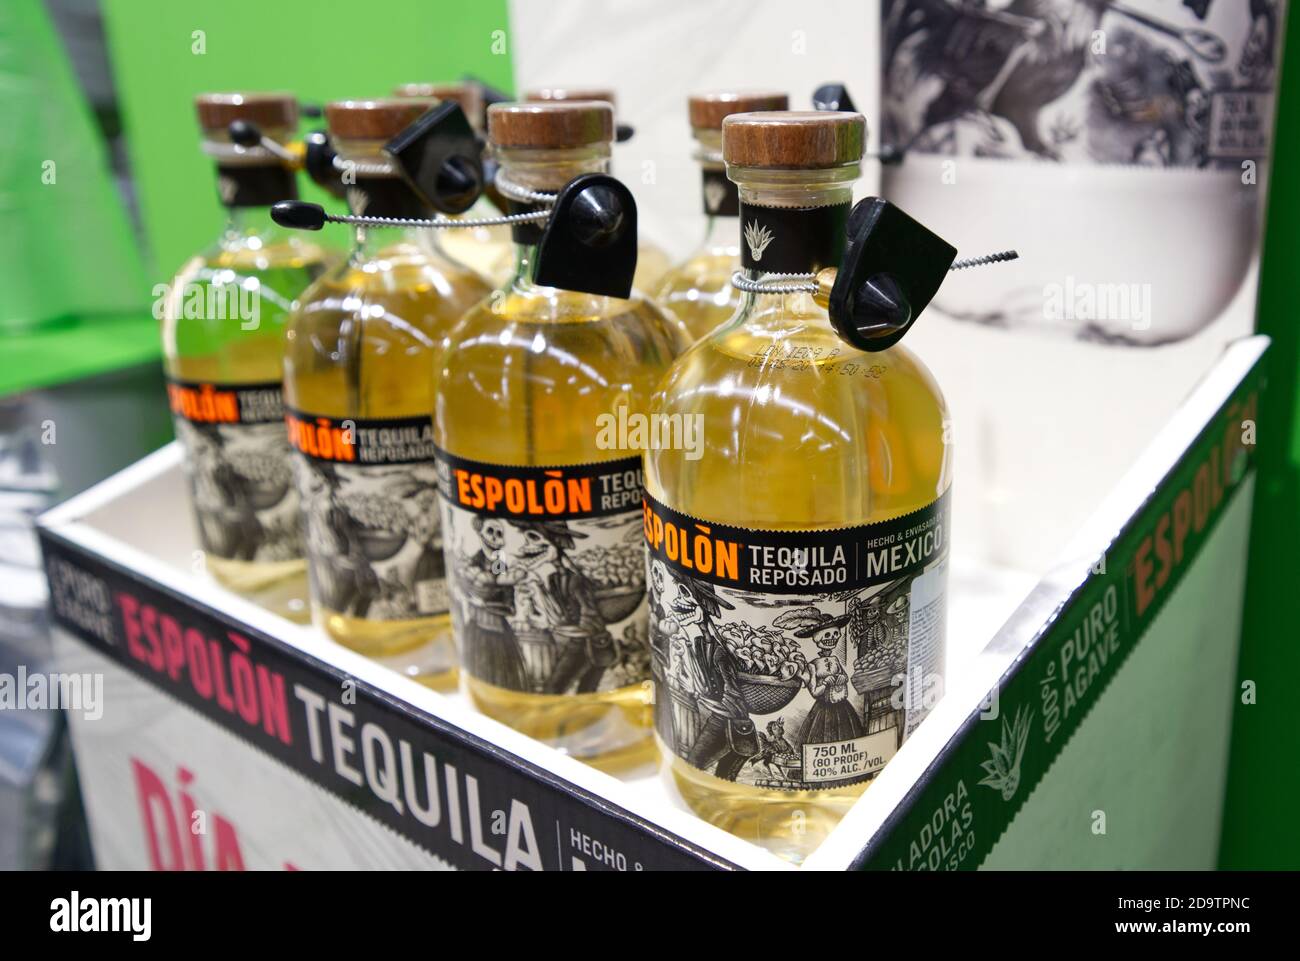 Espolon tequila bottles on promo table in supermarket Stock Photo